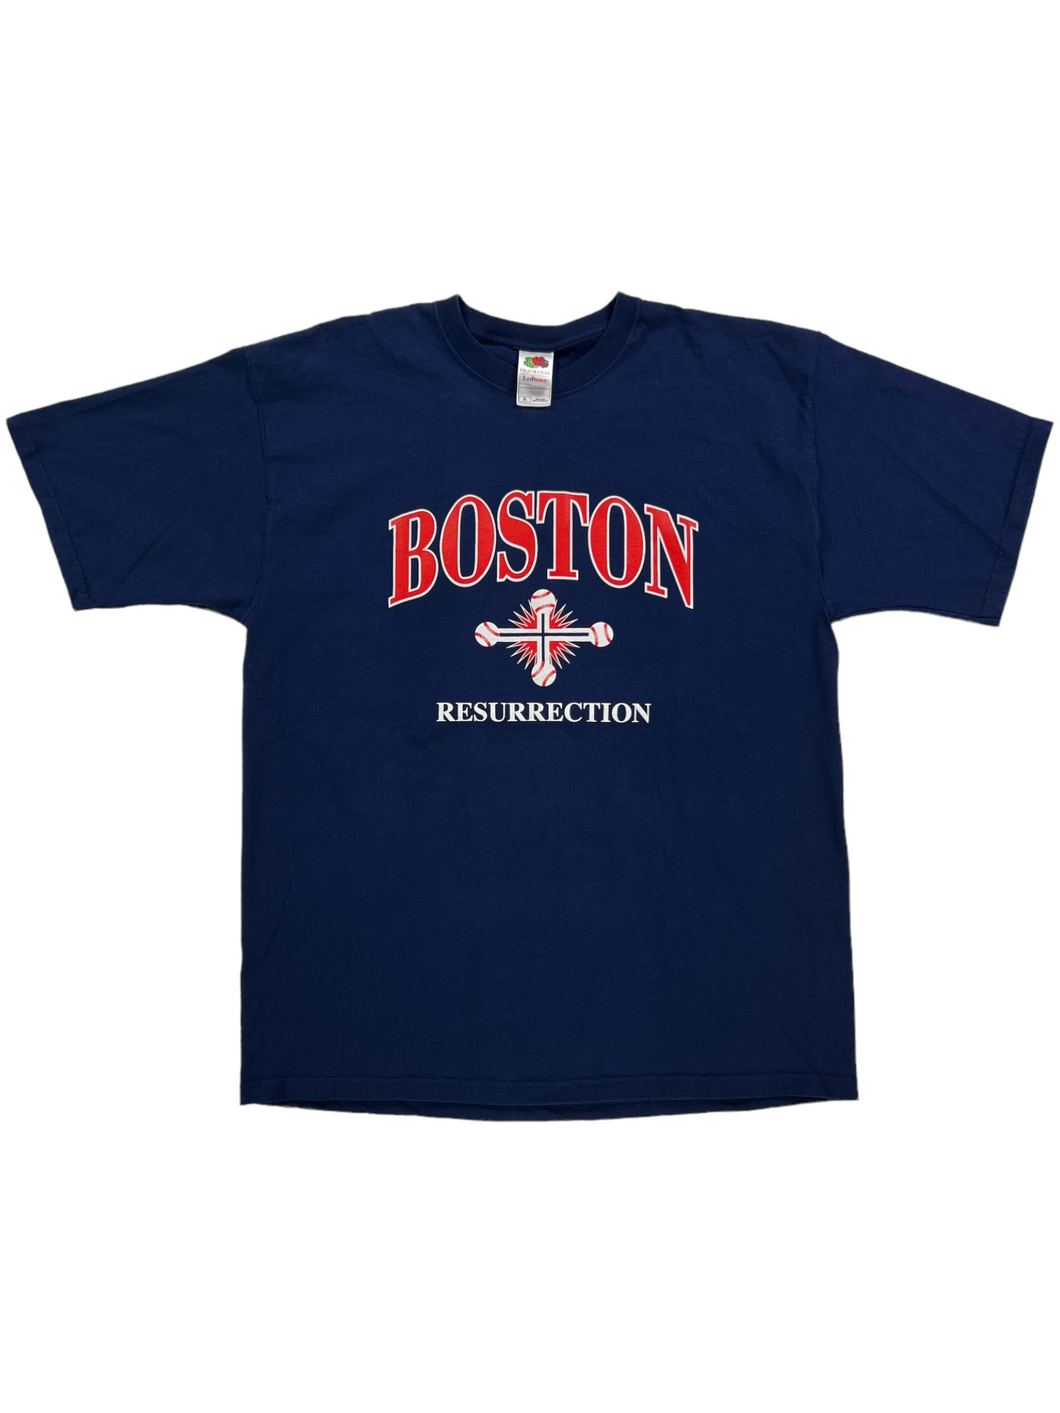 Vintage 2004 Boston Red Sox reverse the curse resurrection tour tee (XL)